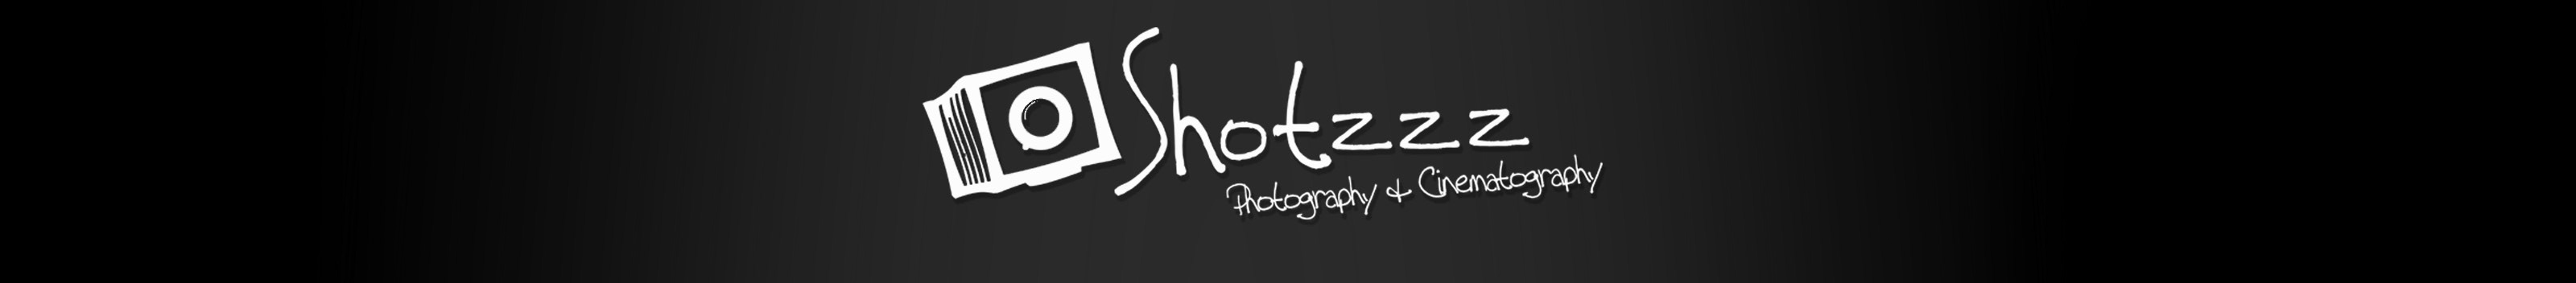 Shotzzz Photography's profile banner